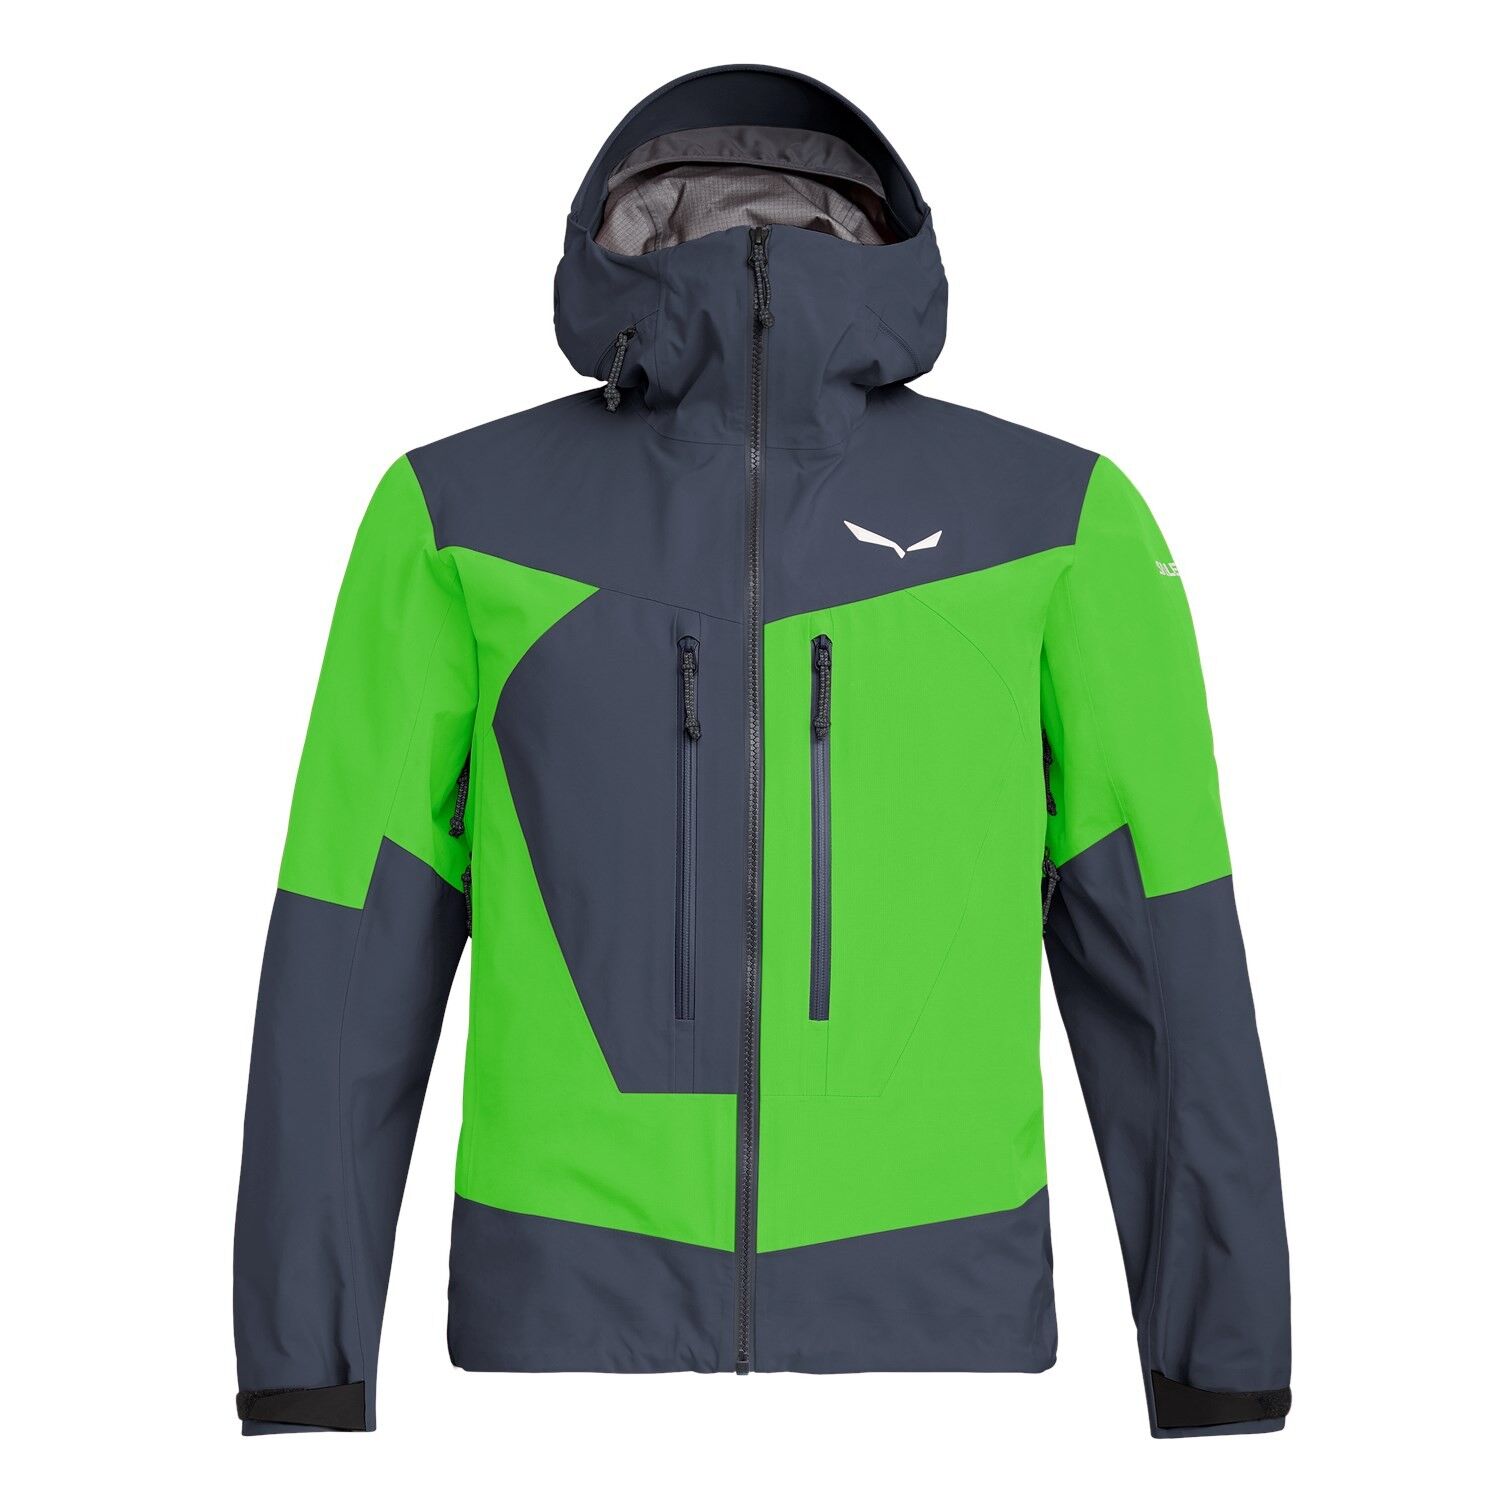 Salewa Ortles 3 GTX Pro - Hardshell jacket - Men's